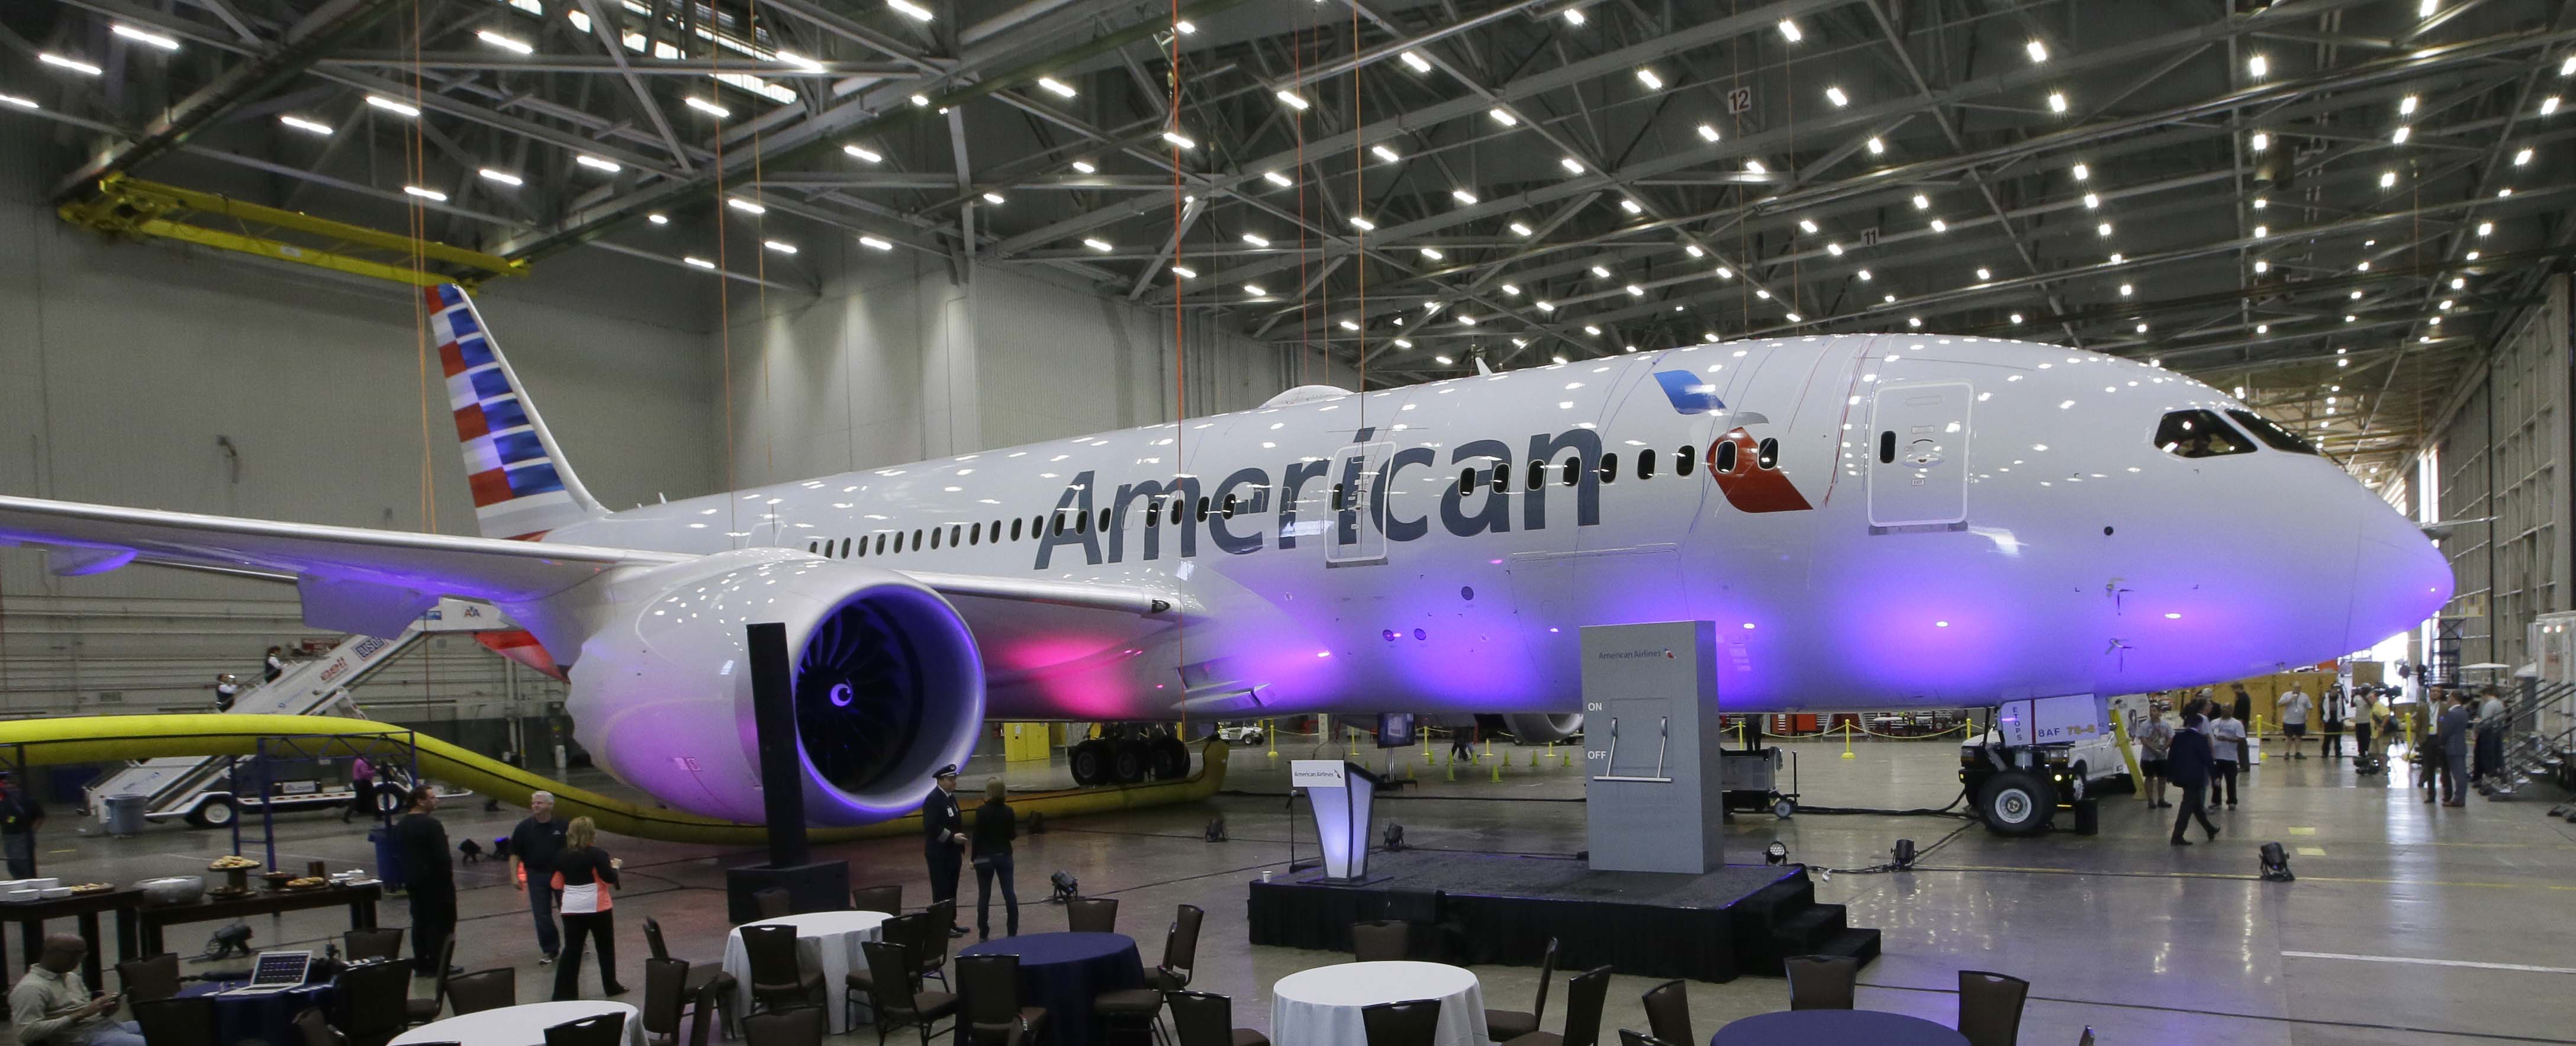 Resultado de imagem para American Airlines hangar brasil